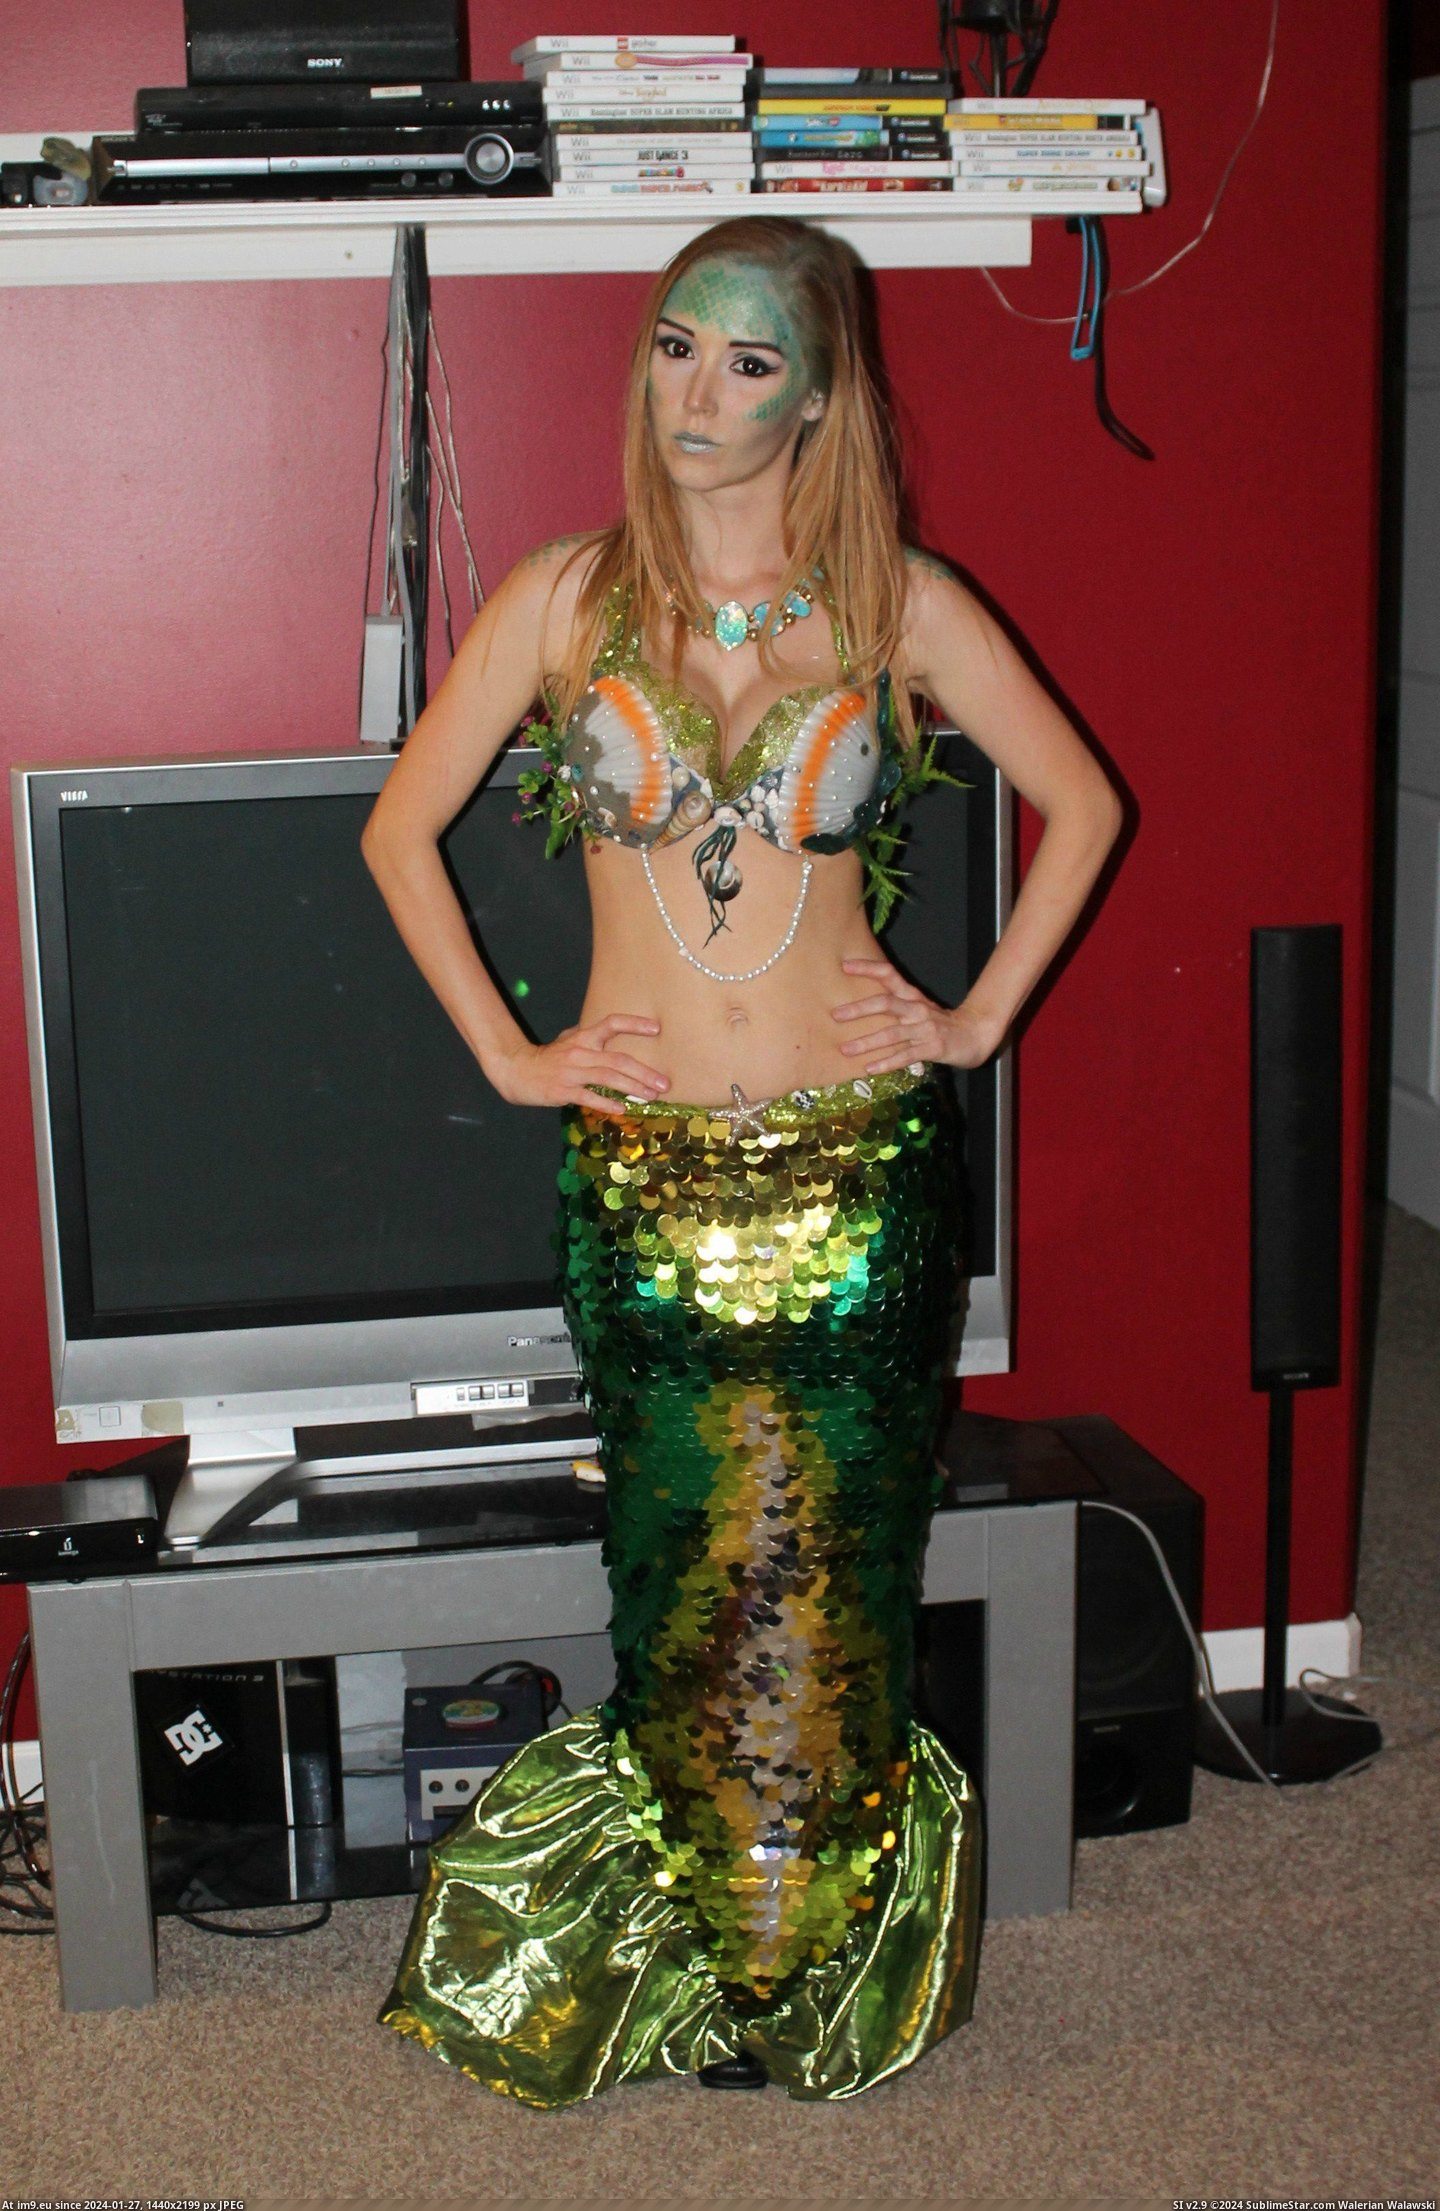 #Costume #Homemade #Mermaid [Pics] My homemade mermaid costume! 3 Pic. (Obraz z album My r/PICS favs))